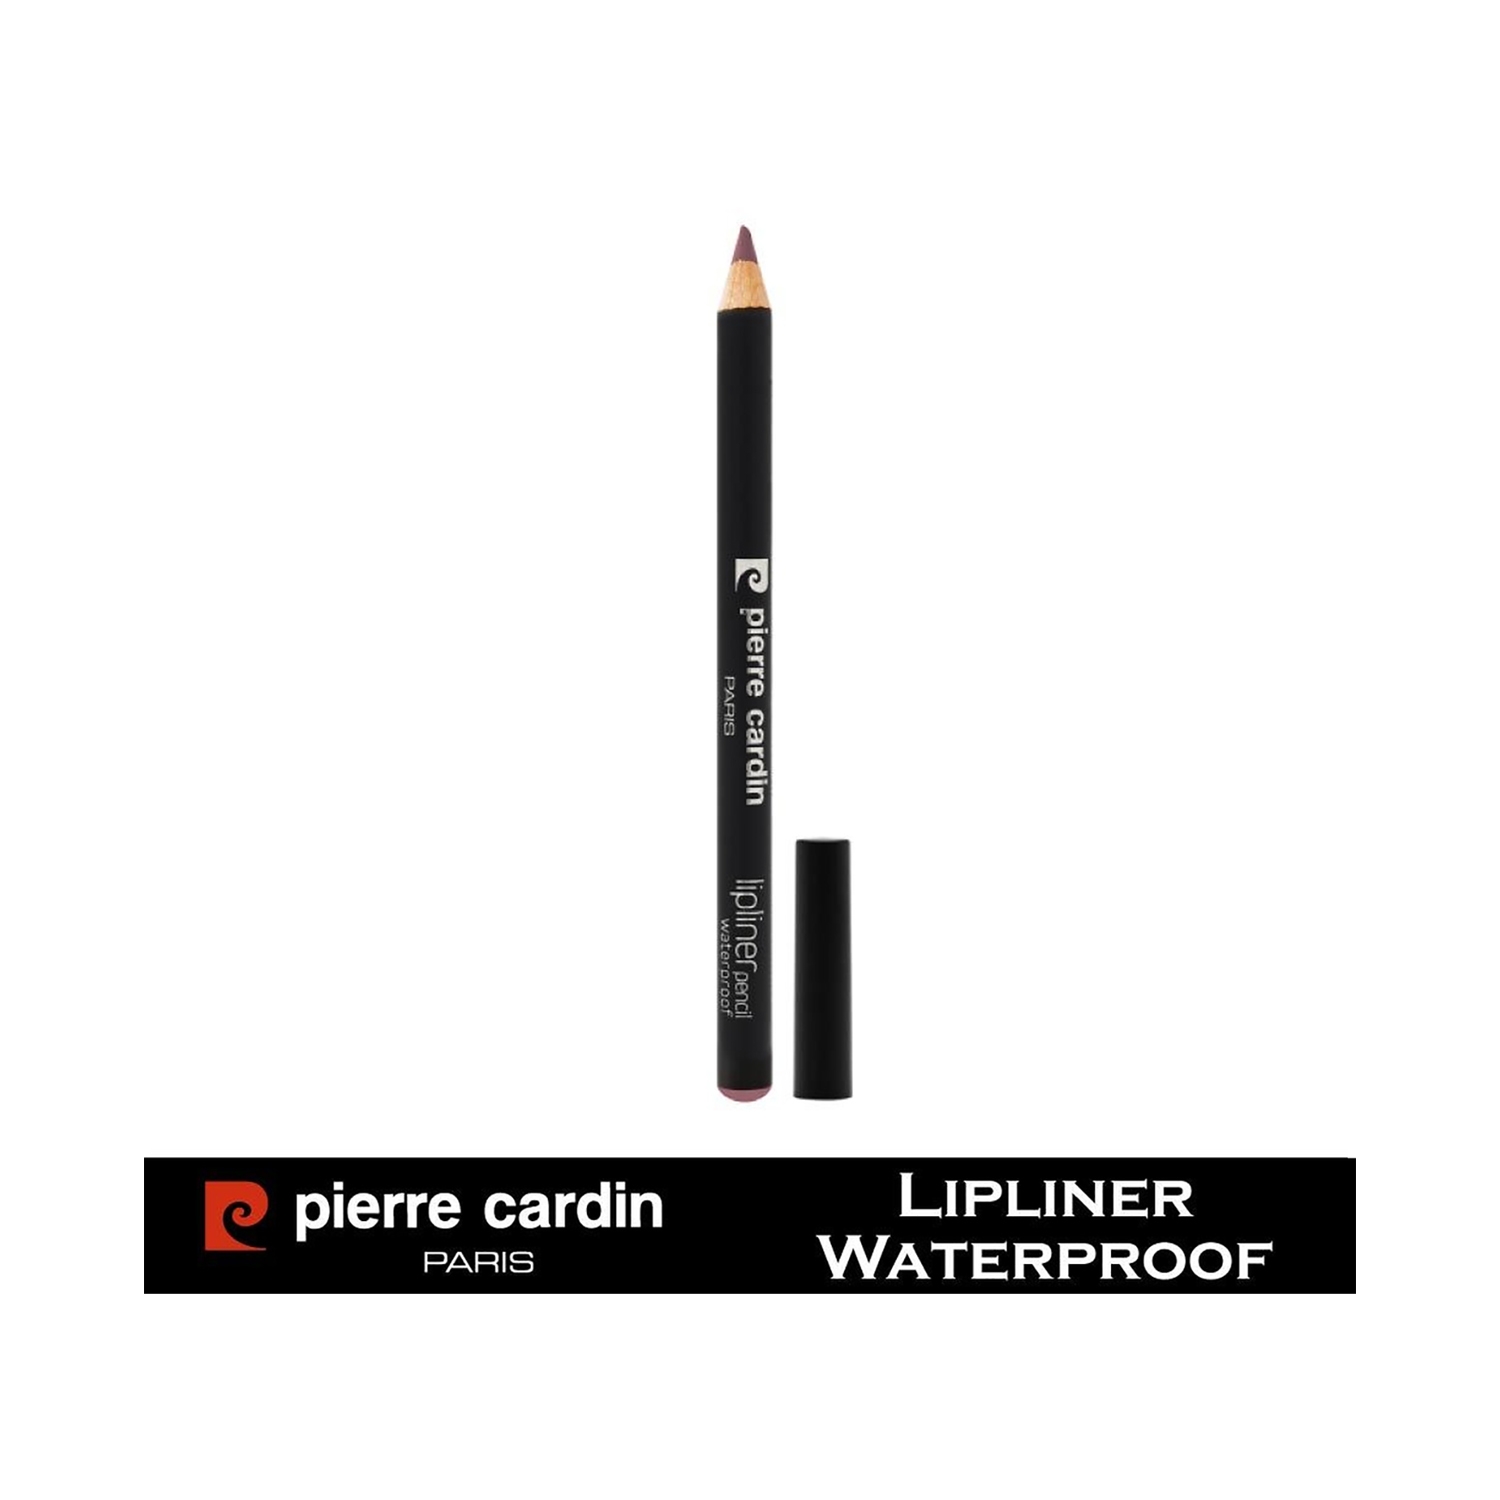 Pierre Cardin Paris | Pierre Cardin Paris Waterproof Lip Liner Pencil - 595 Mystic Lilac (0.4g)